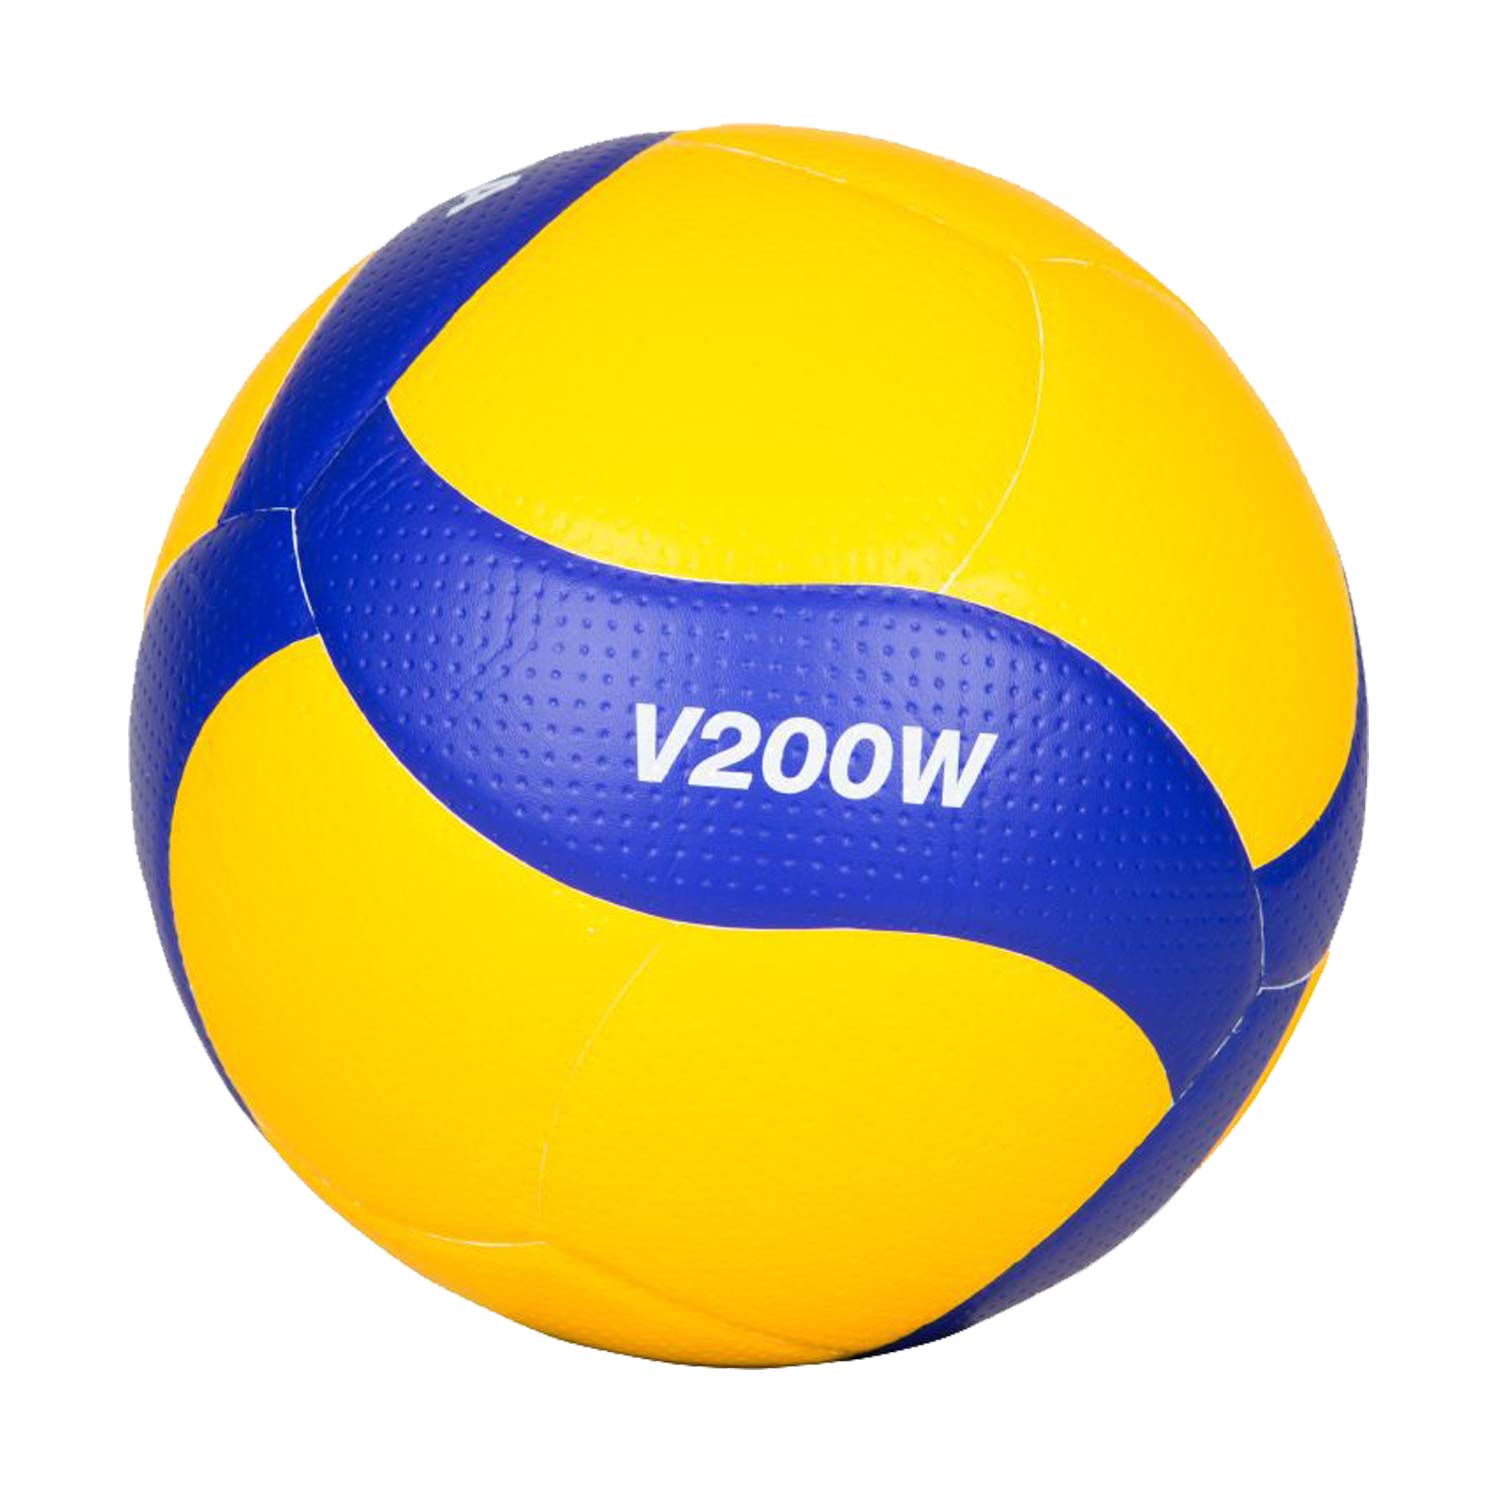 Mikasa Volleyball "V200W"